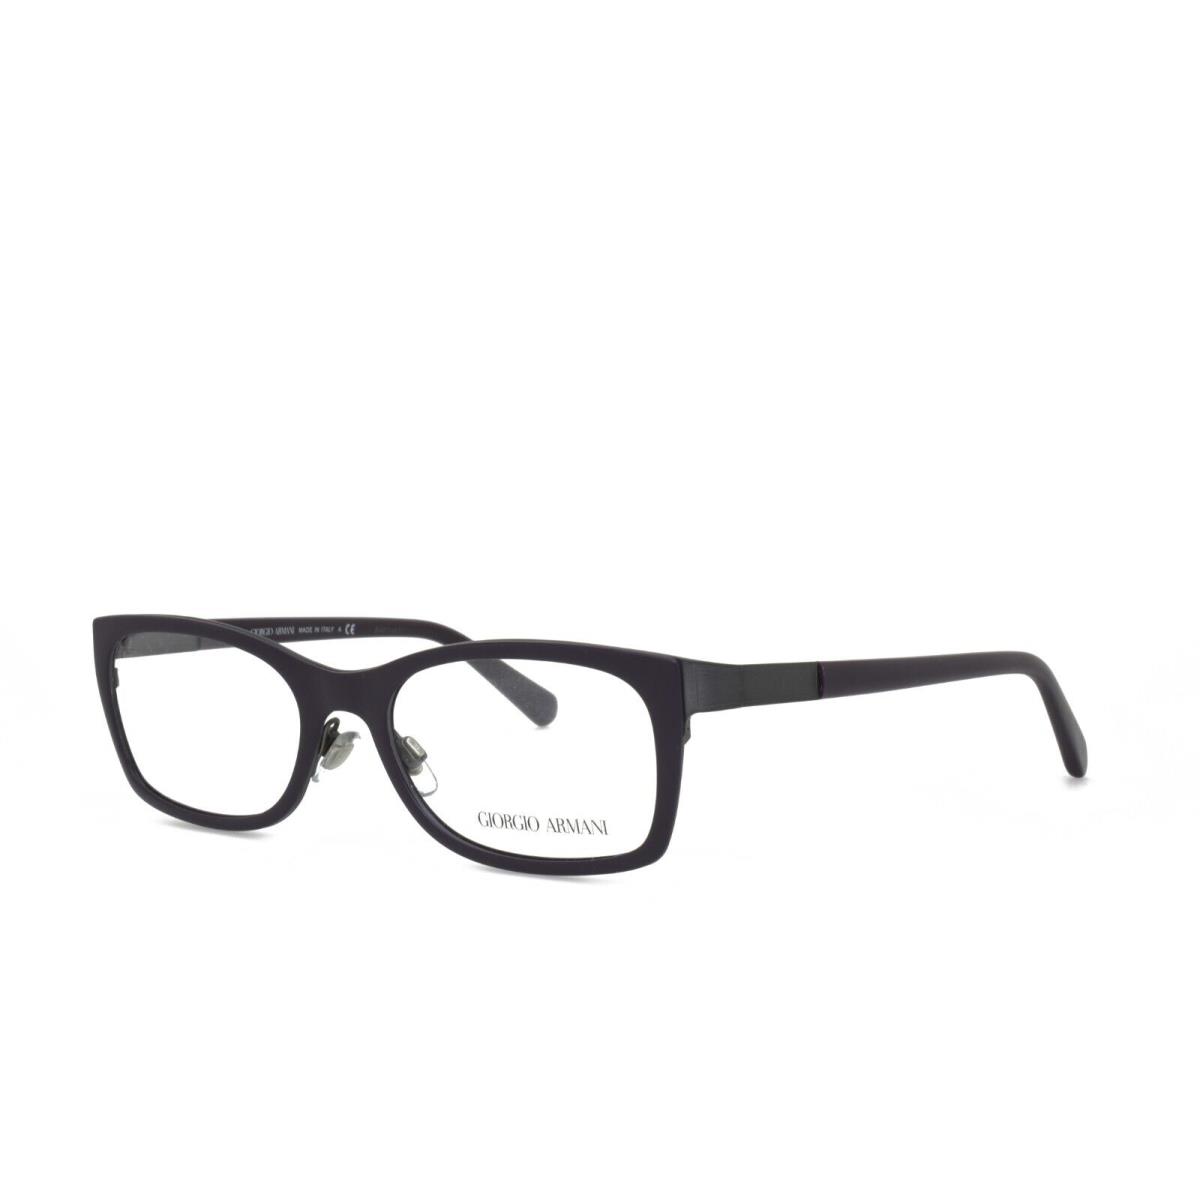 Giorgio Armani 5013 3033 50-17-135 Dark Blue Eyeglasses Frames